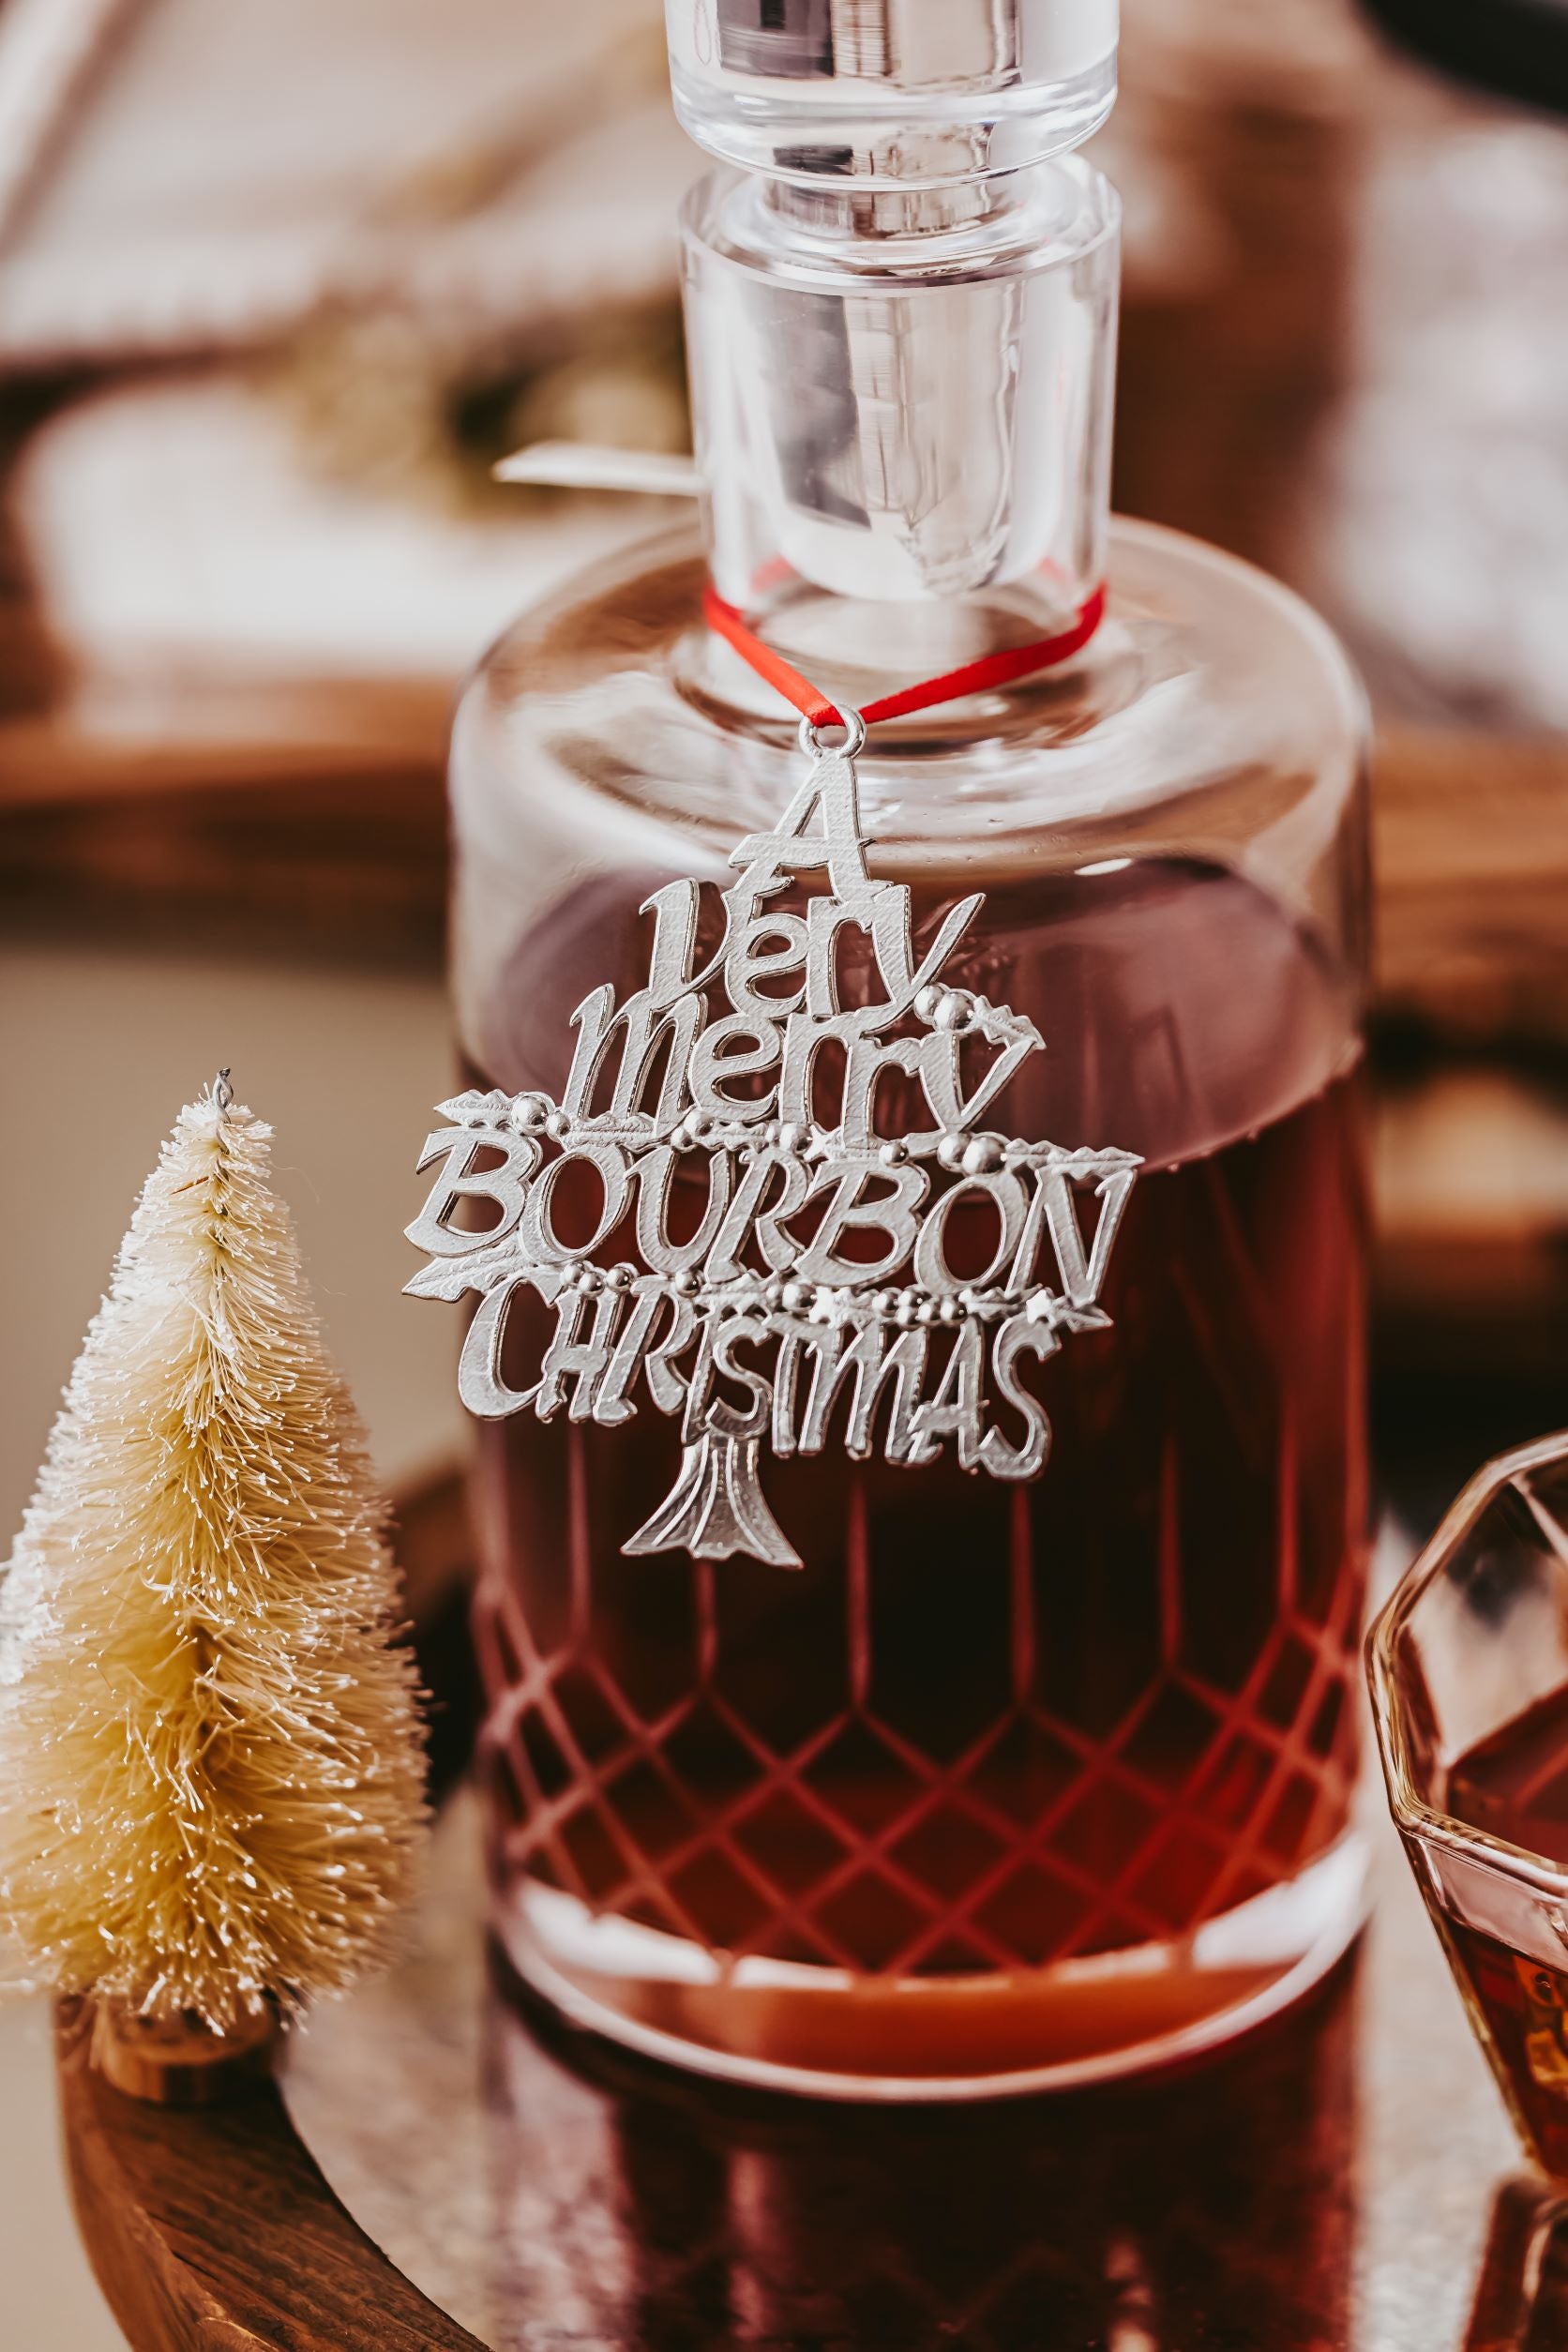 Unique Gift for Bourbon Drinker